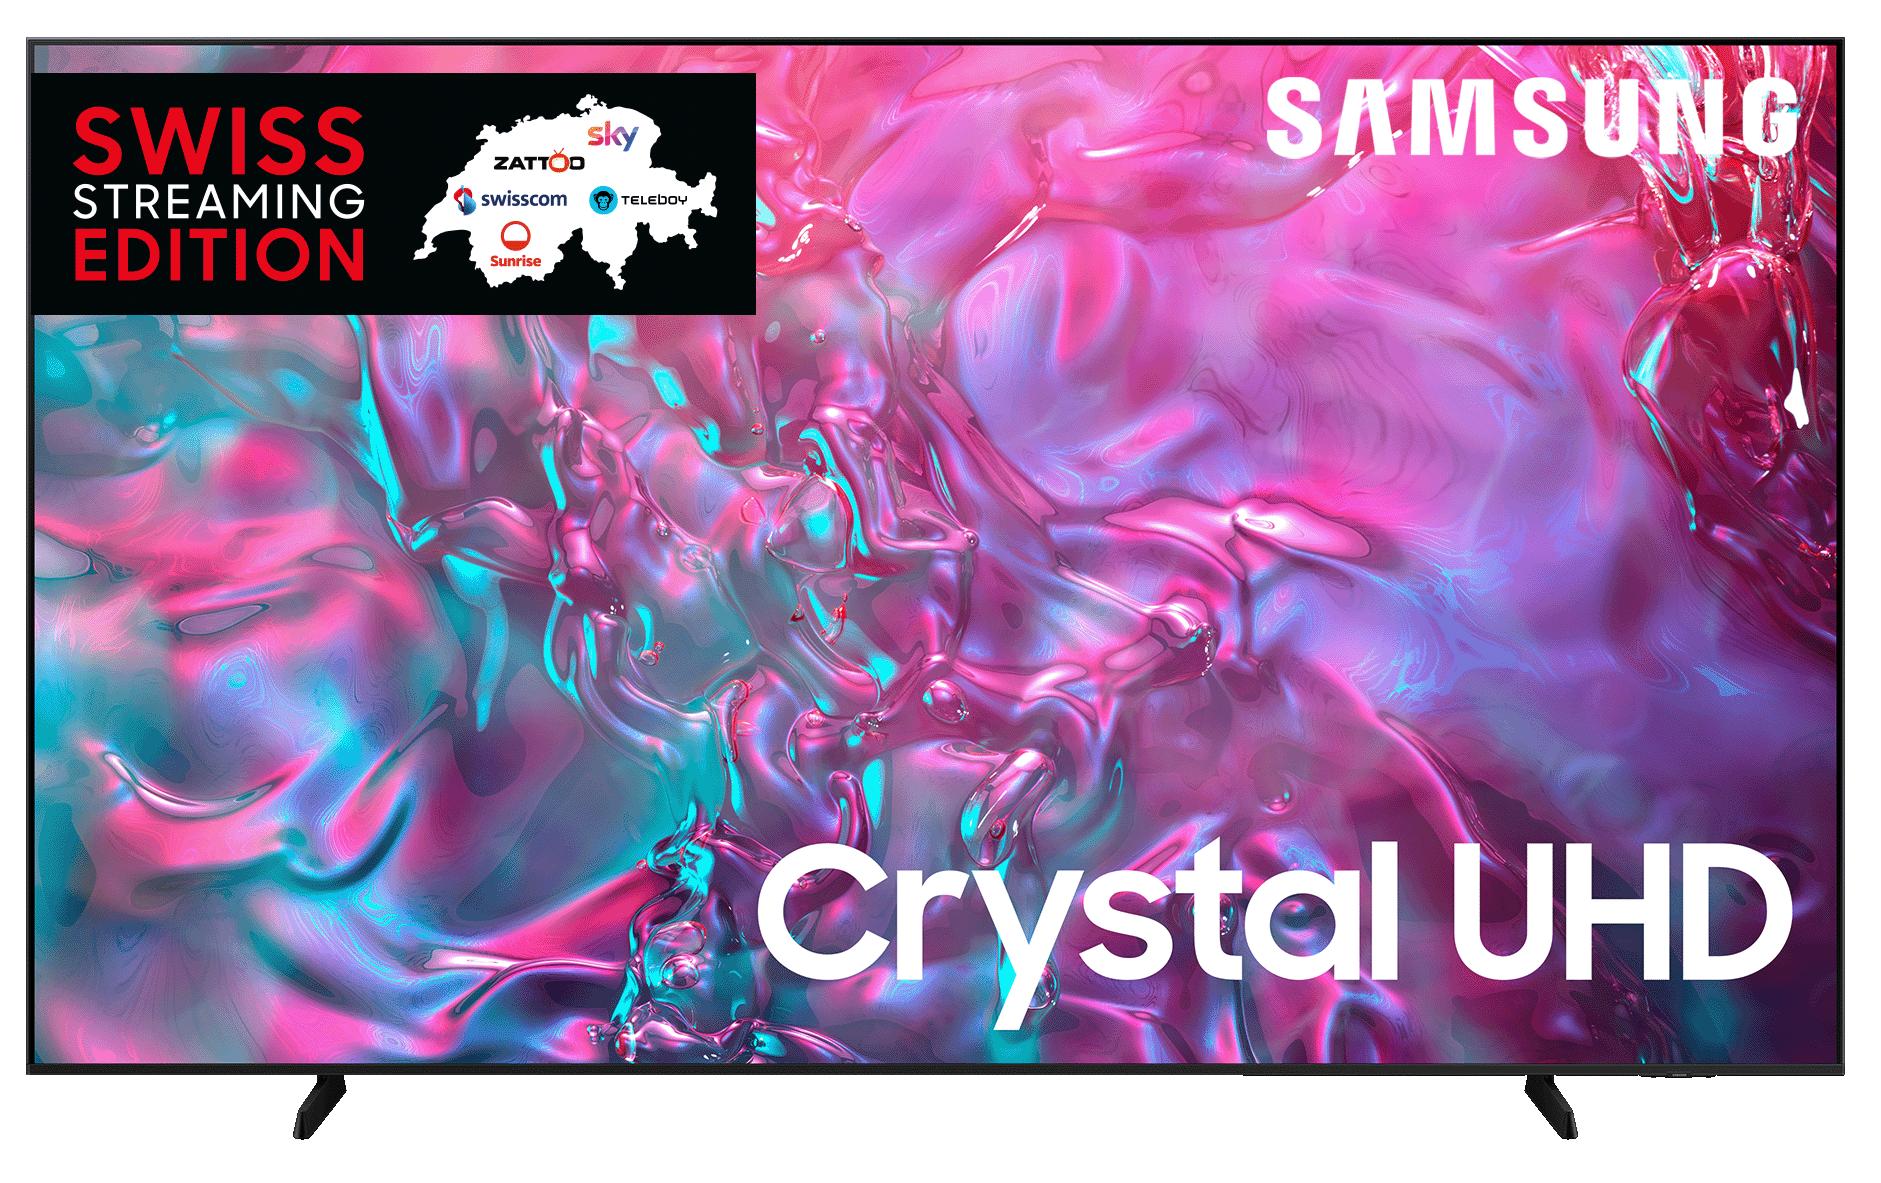 Samsung TV UE55DU7170 UXXN 55, 3840 x 2160 (Ultra HD 4K), LED-LCD